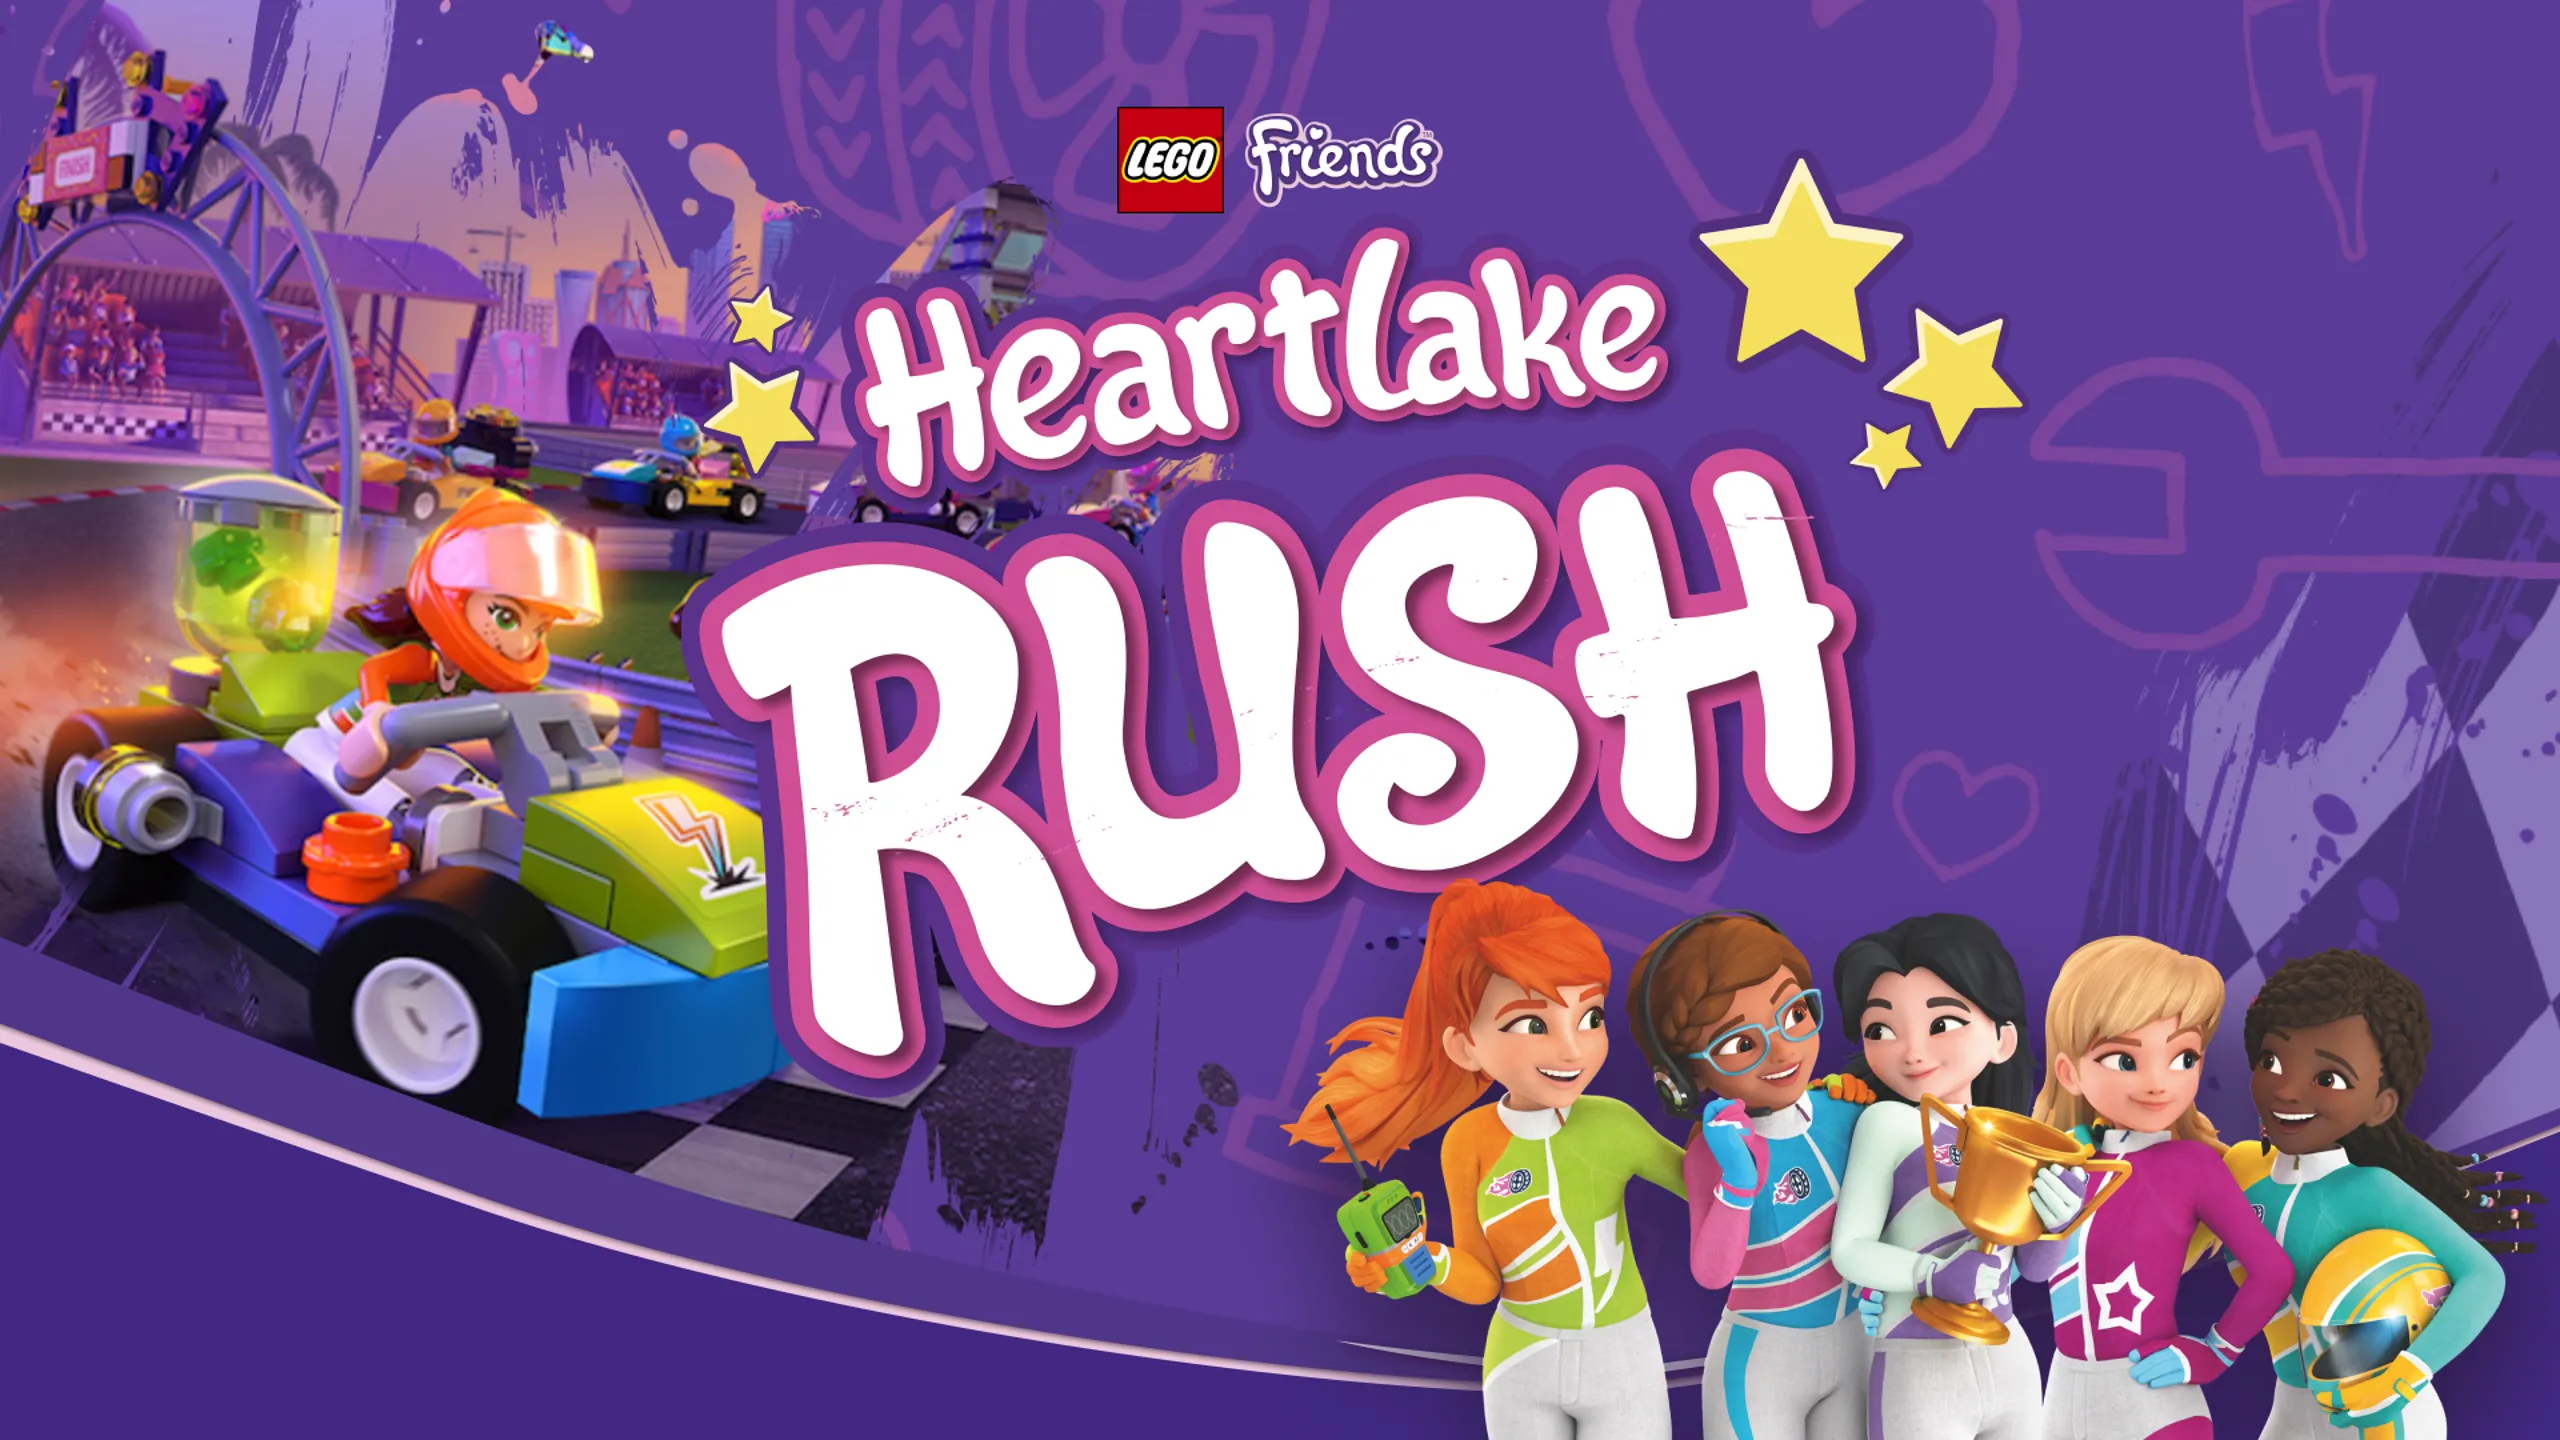 Car Rush - Safe Kid Games